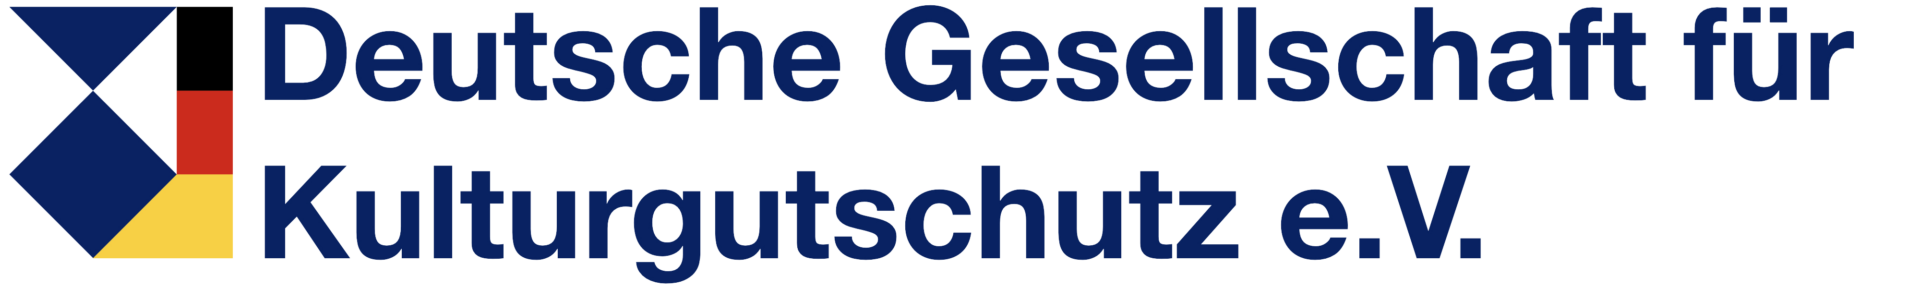 DGKS_Logo_Schrif_transparent